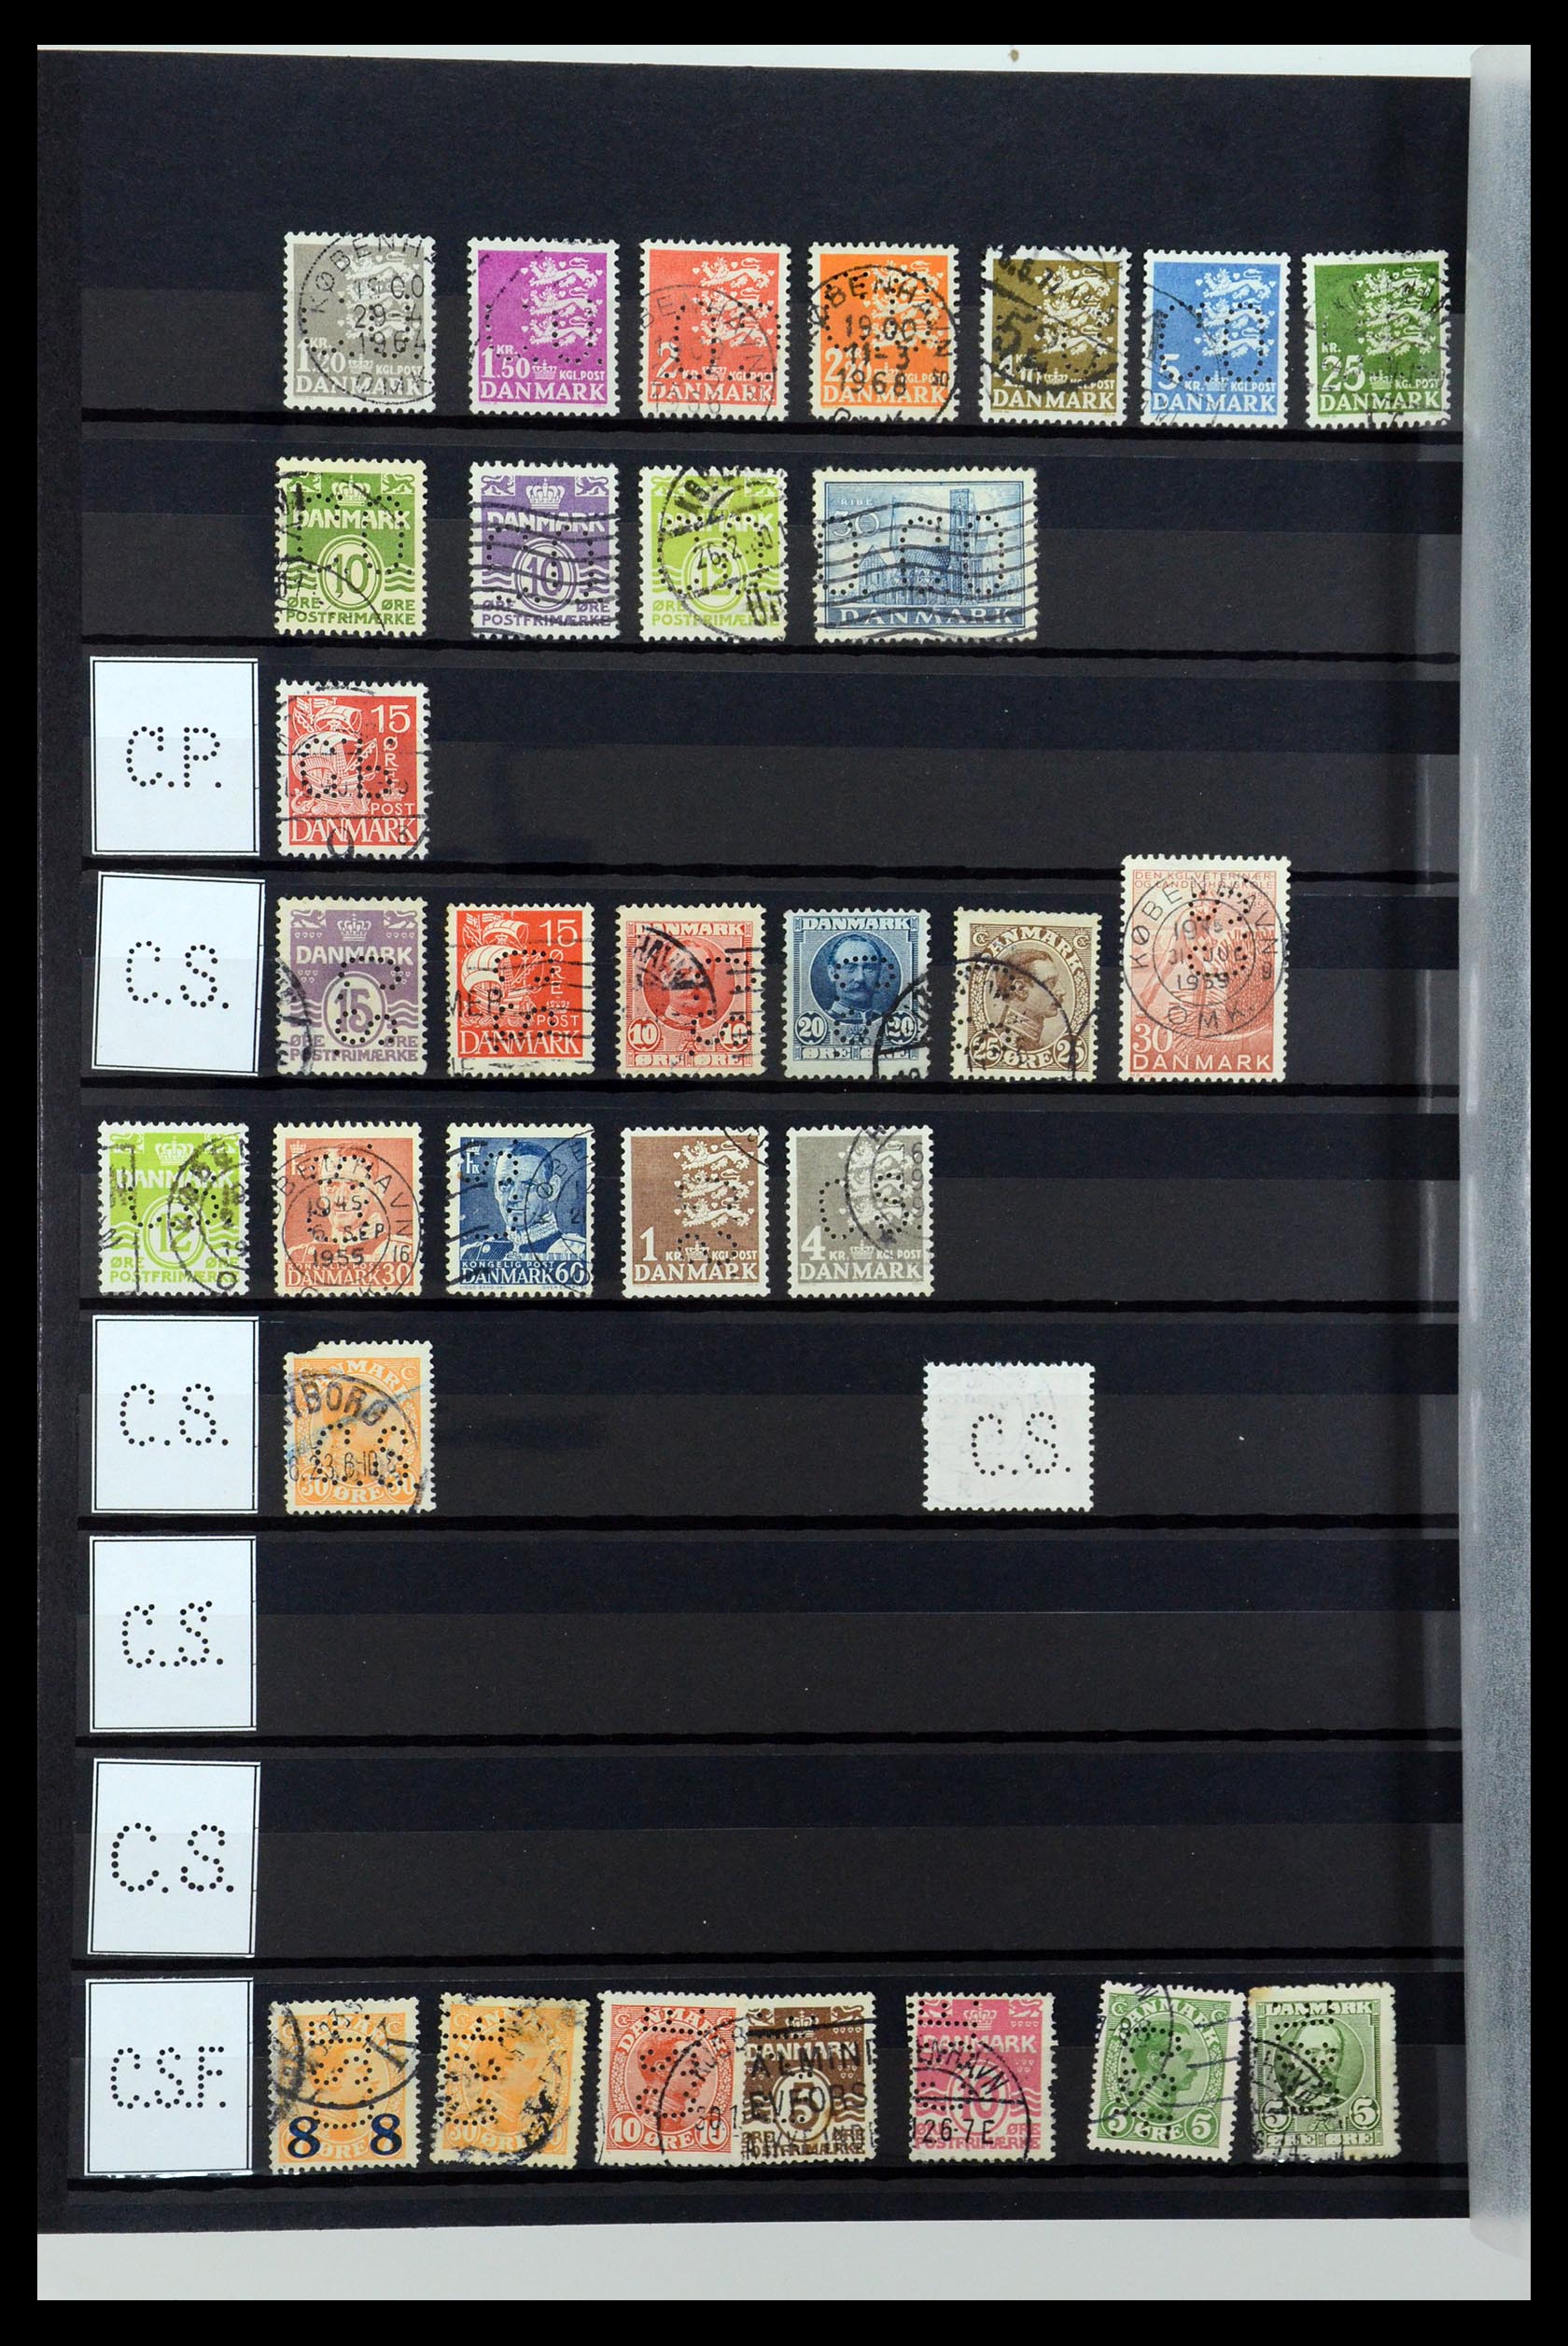 36396 030 - Stamp collection 36396 Denmark perfins.